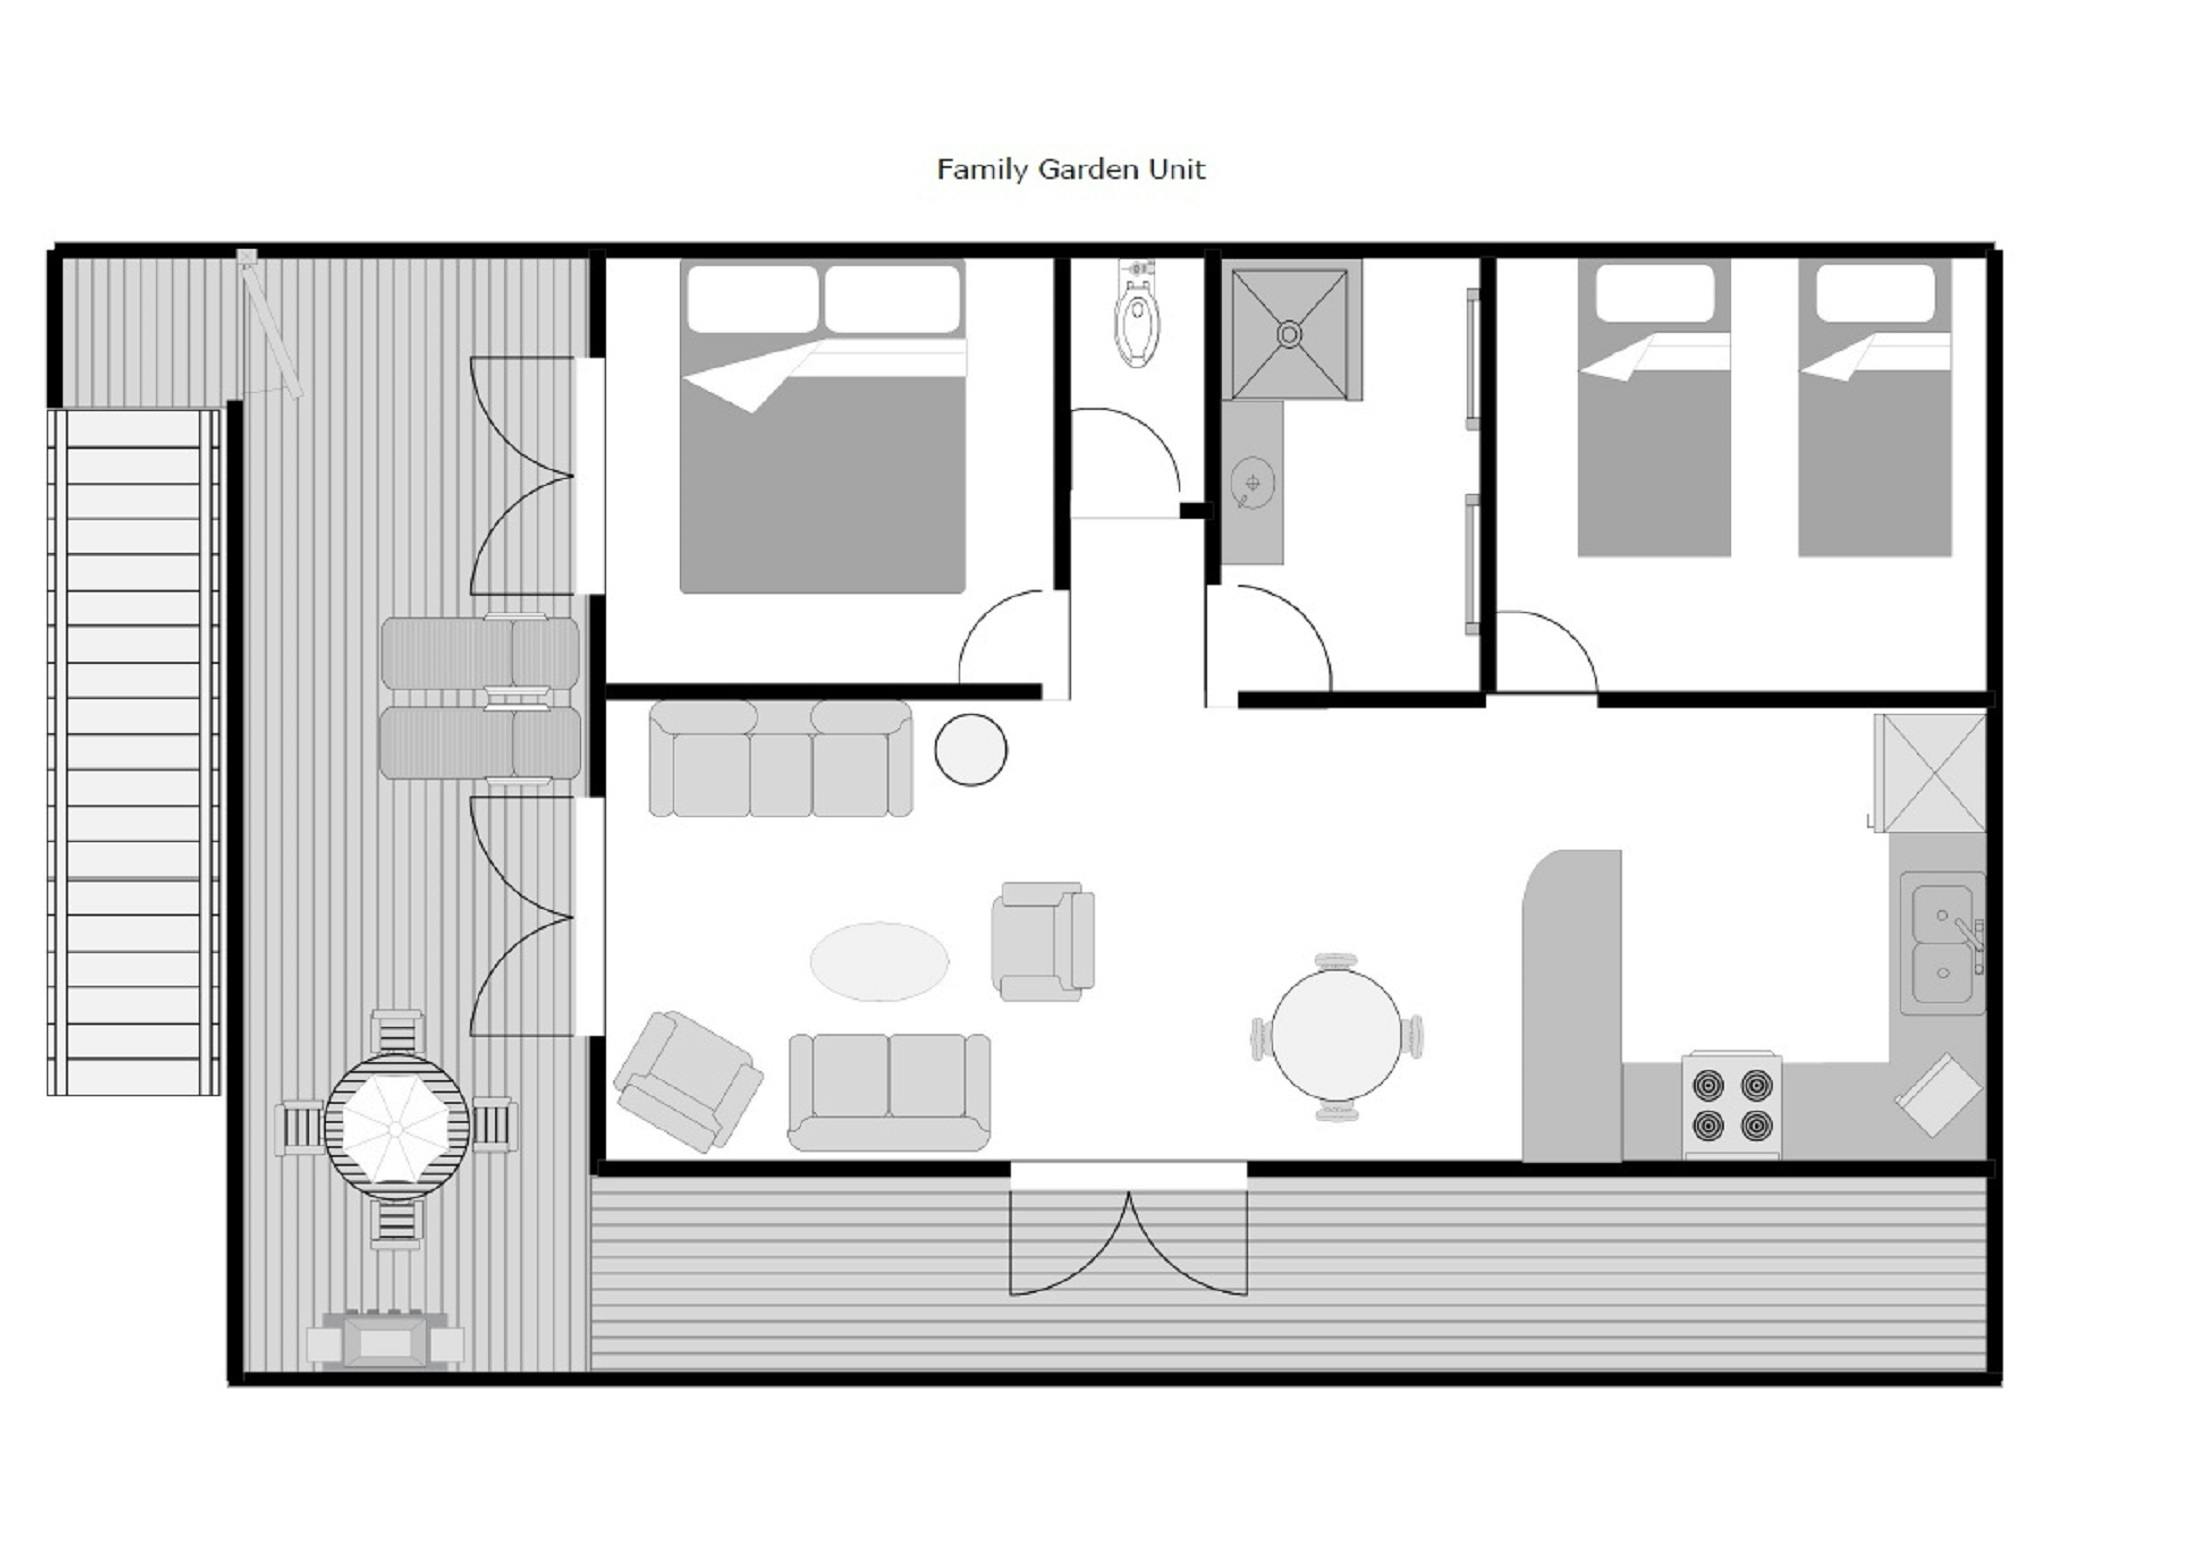 muri-beachcomber-rarotonga-family-garden-unit-floor- plan-layout